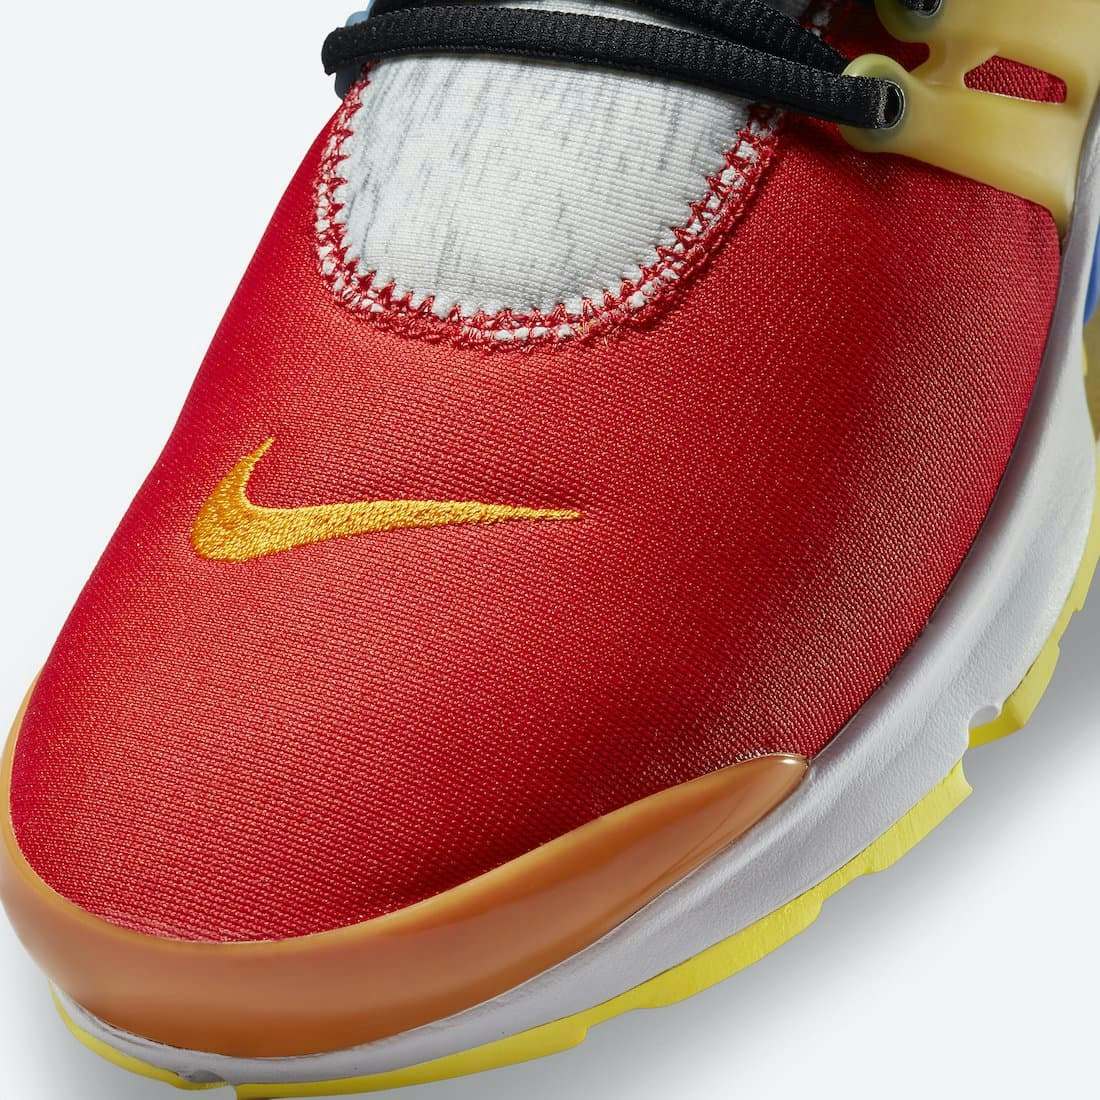 Nike Air Presto “What The” 